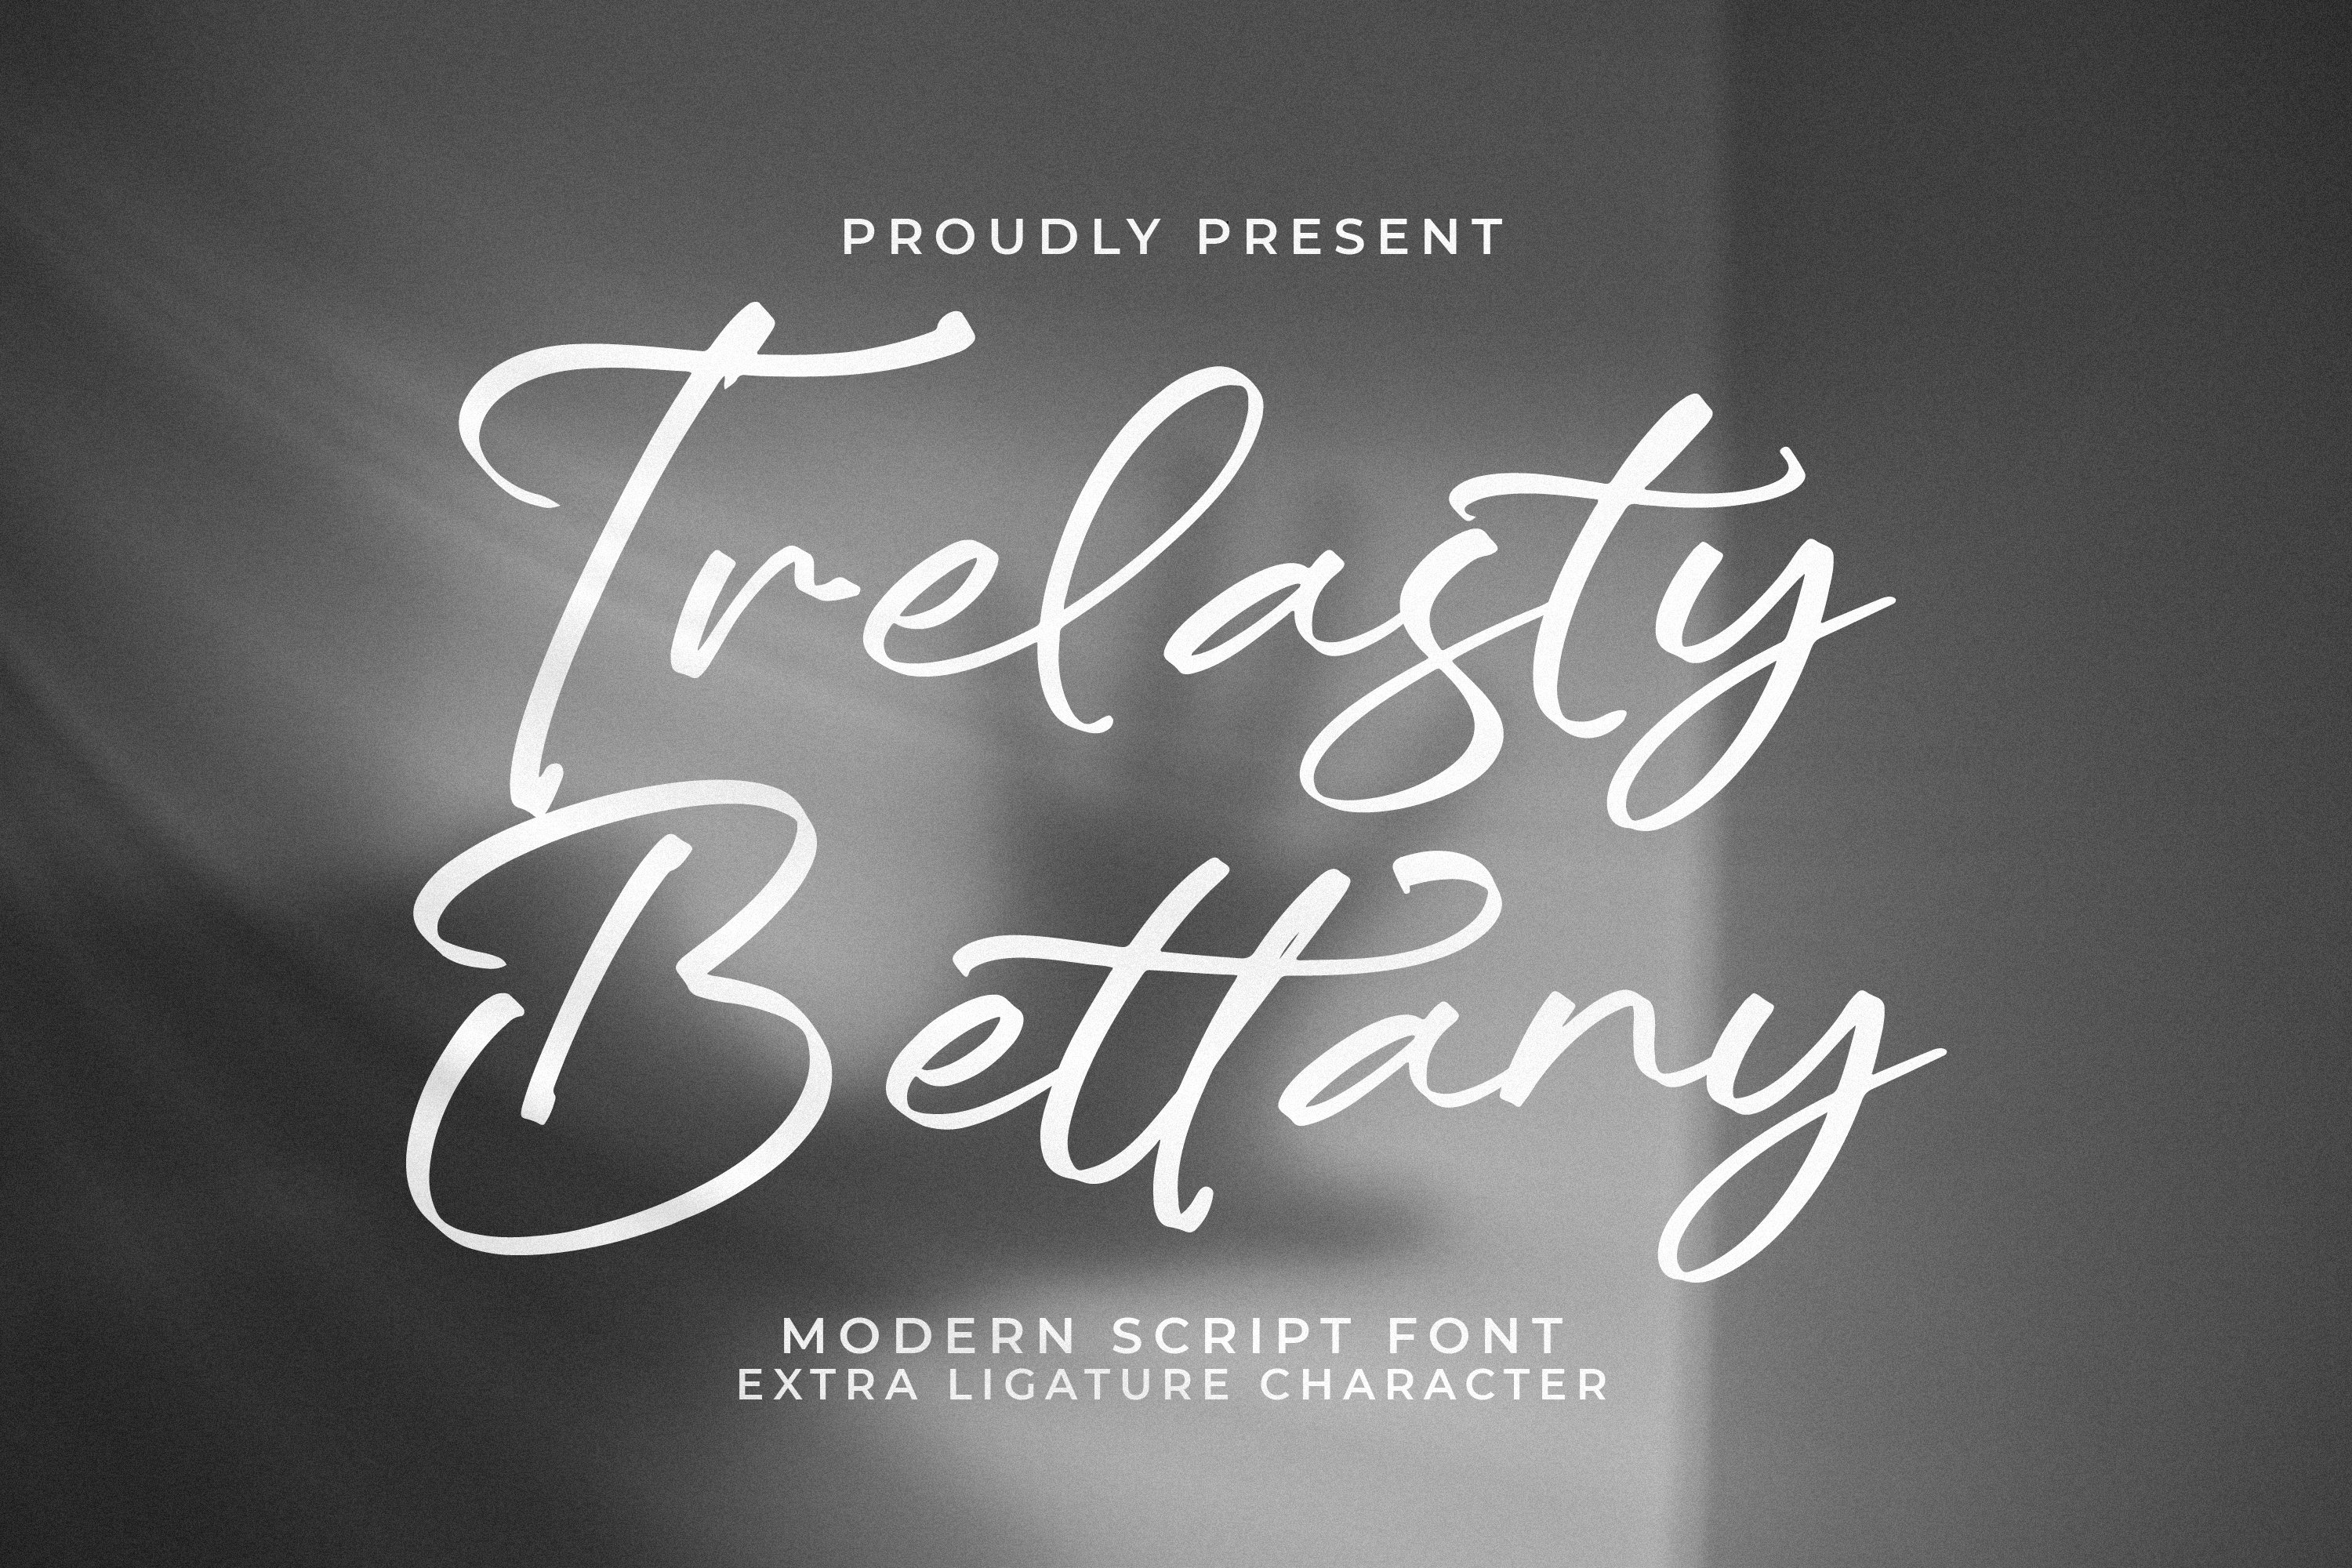 Police Trelasty Bettany